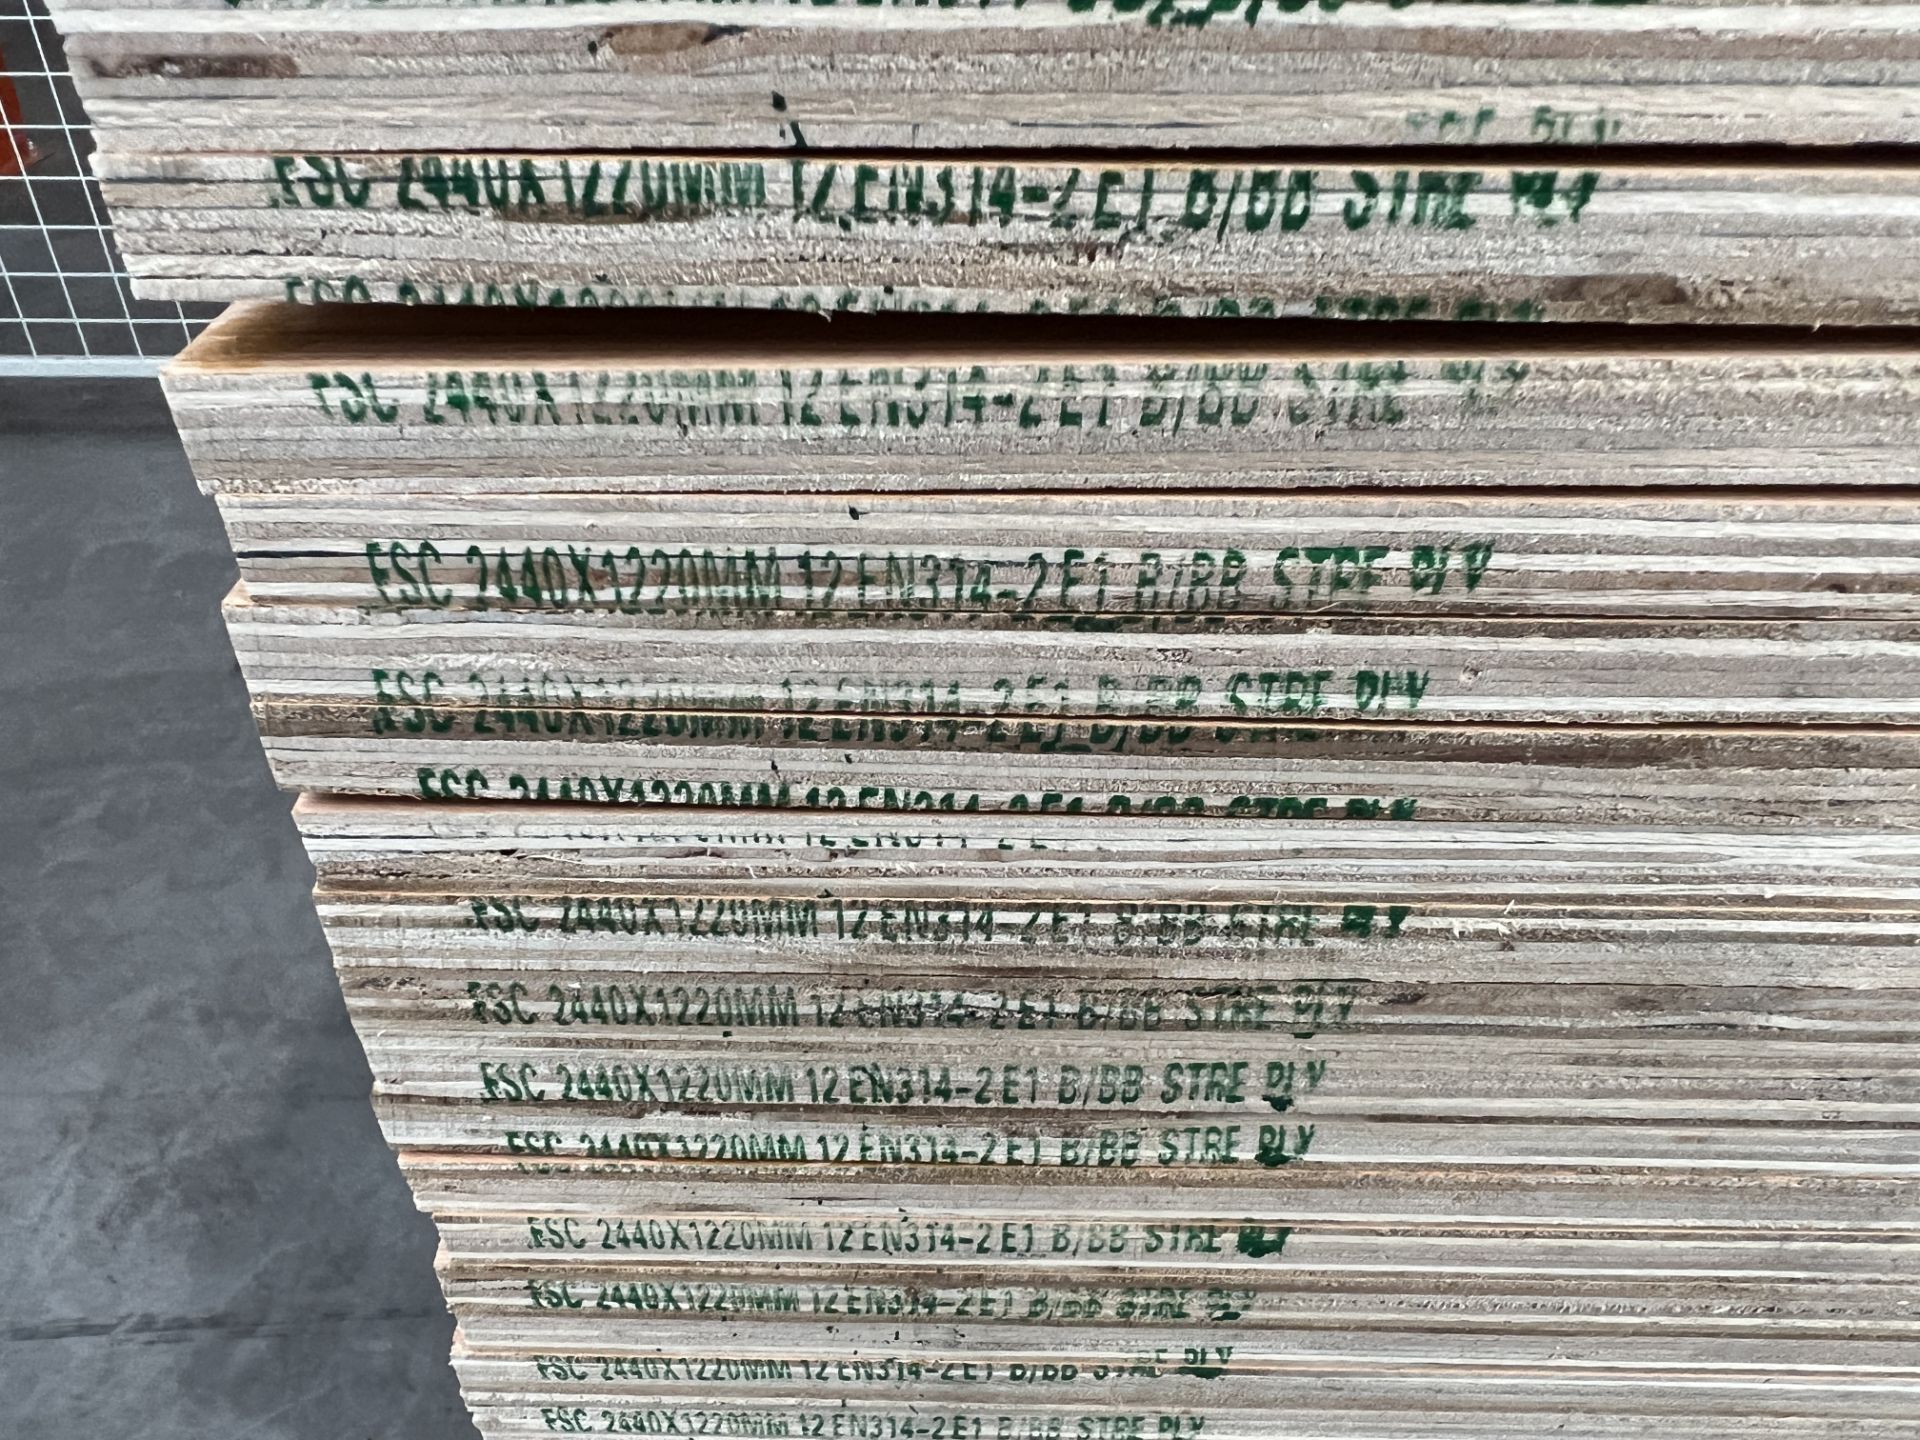 Qty 56 Streply plywood, 2400mm x1200mm x 12mm, grade B/BB (Unused) - Image 3 of 4